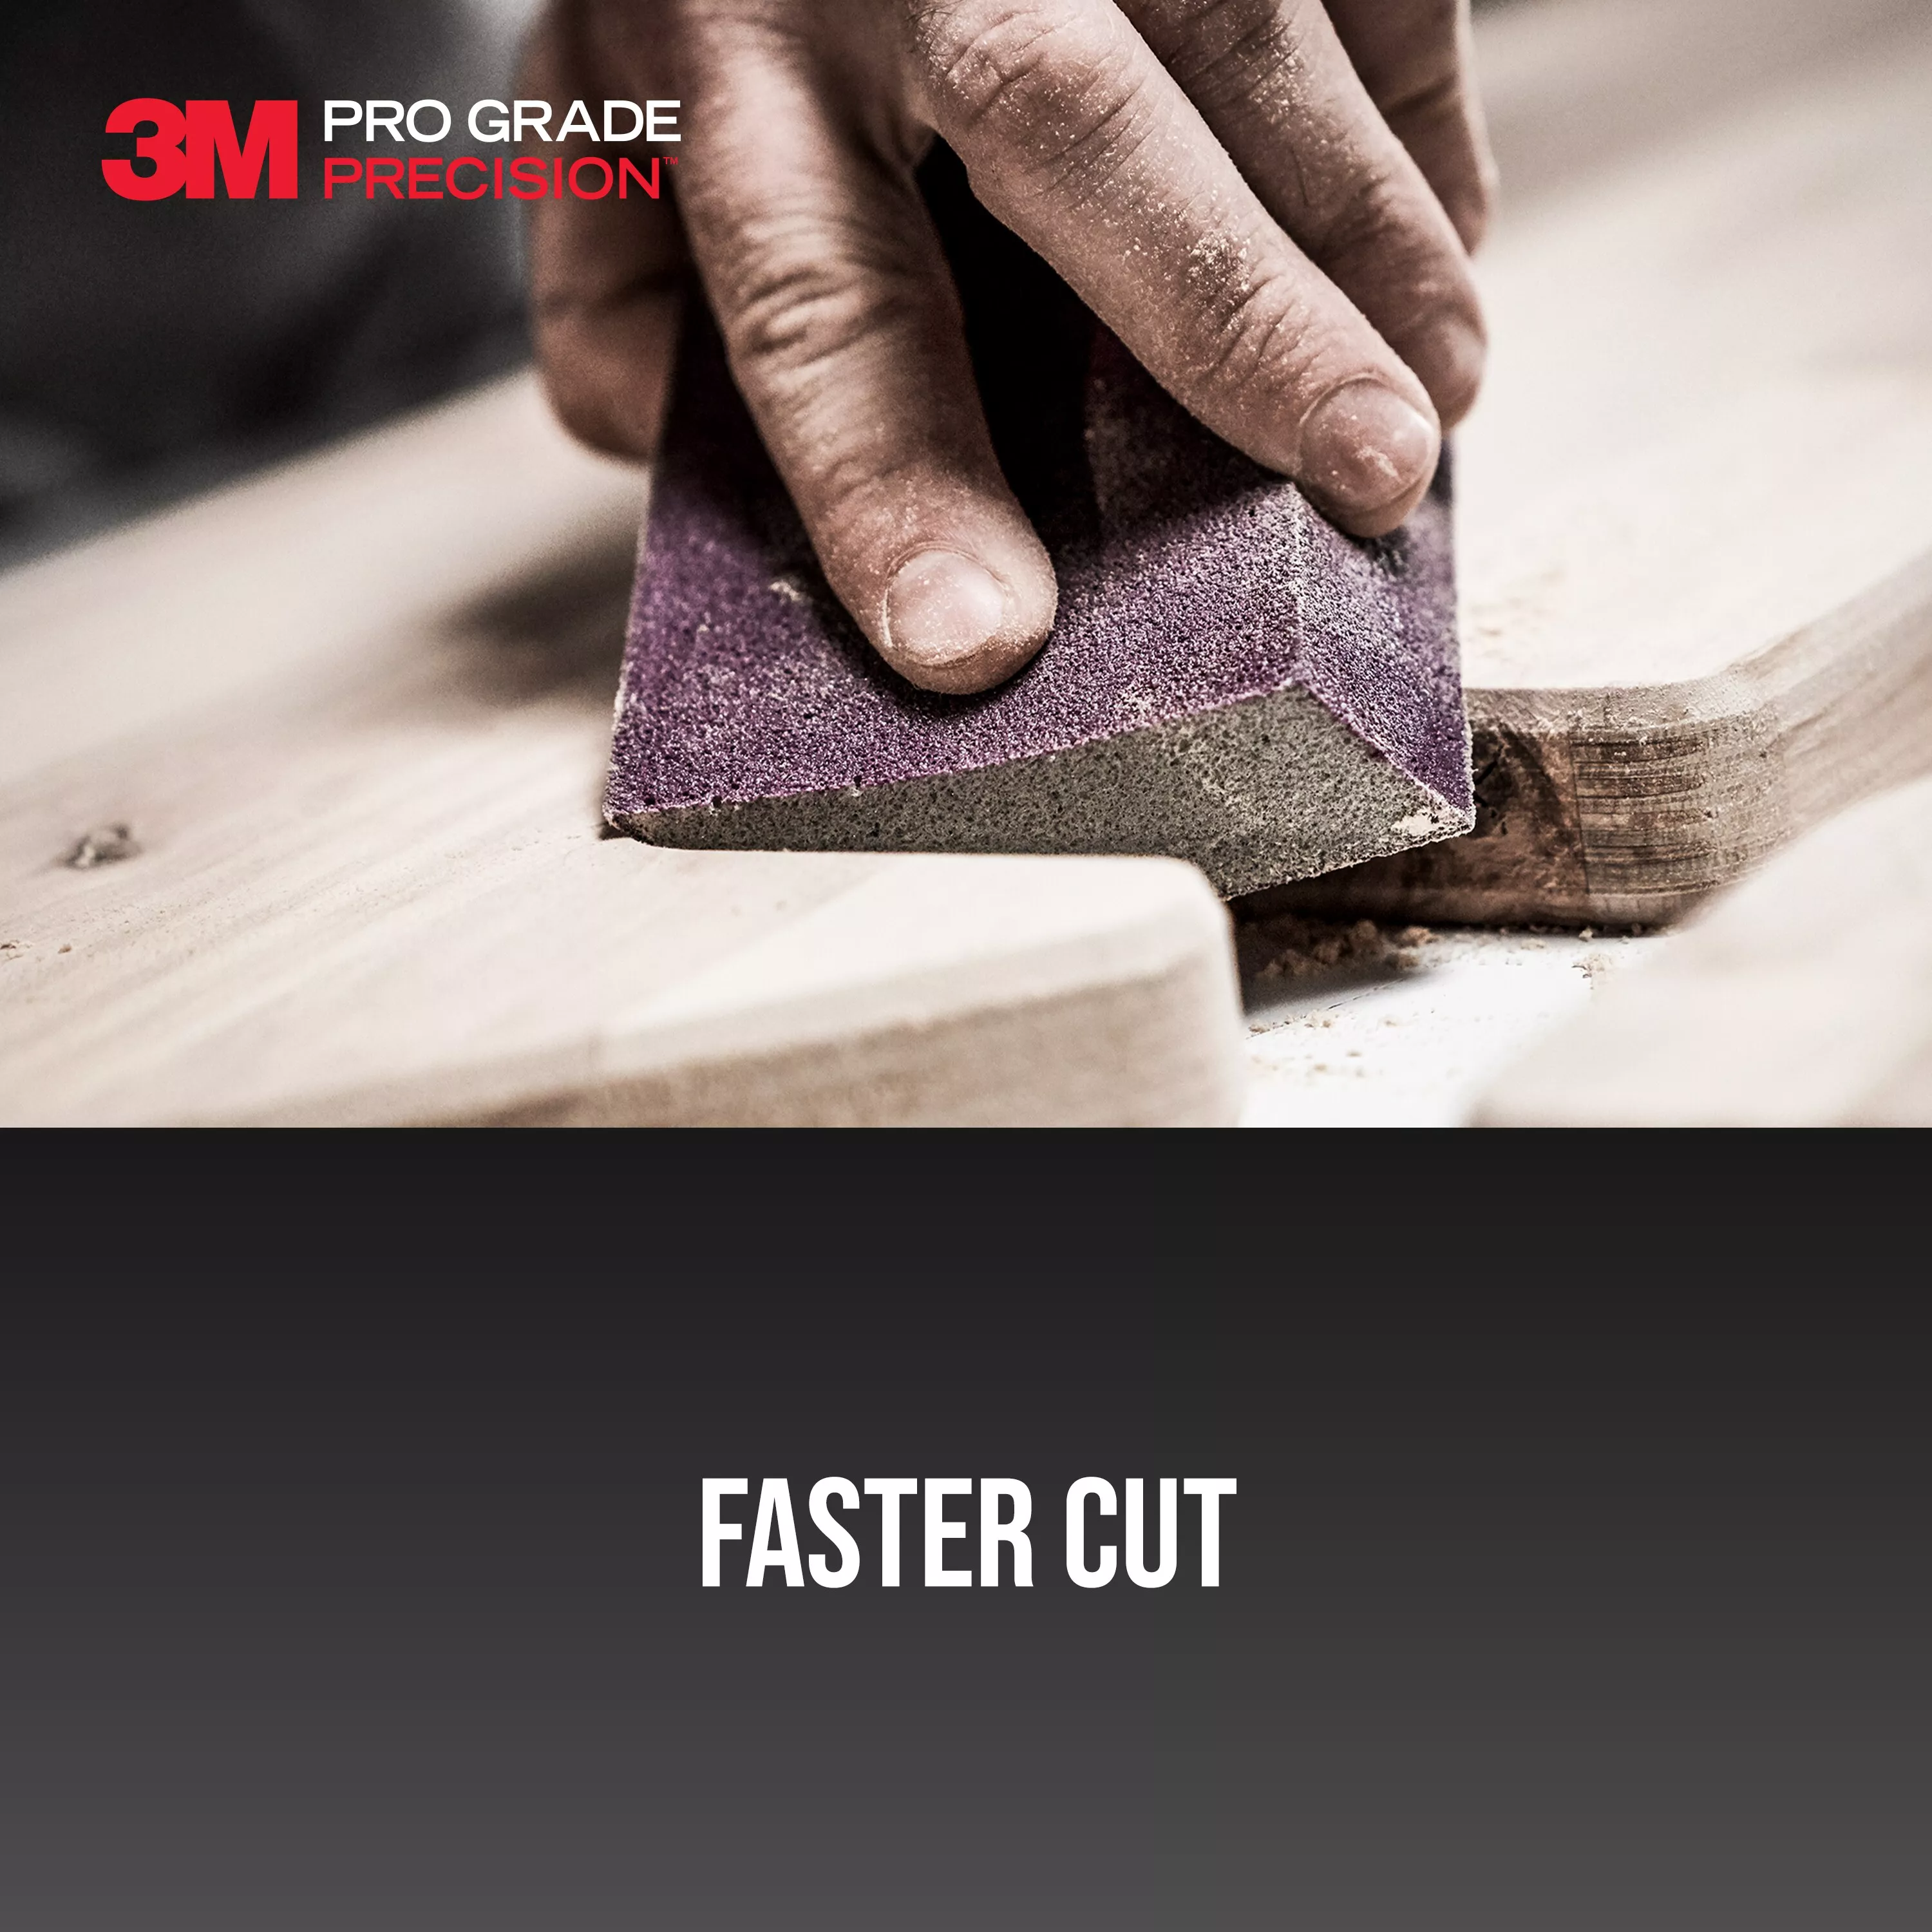 SKU 7100170022 | 3M™ Pro Grade Precision™ Faster Sanding Block Sponge